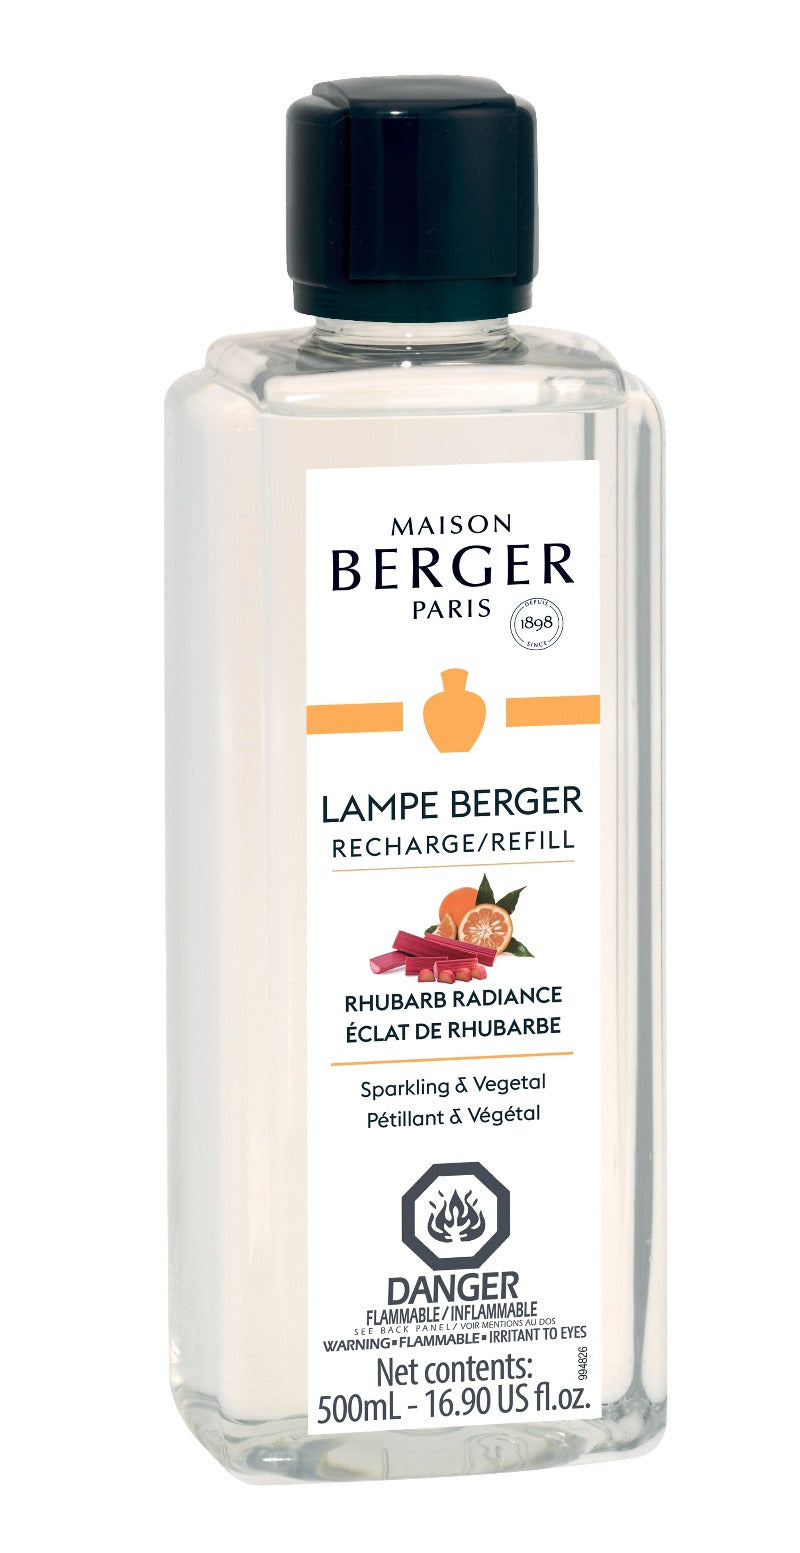 Maison Berger Rhubard Radiance 500ml Refill for Lampe Berger 